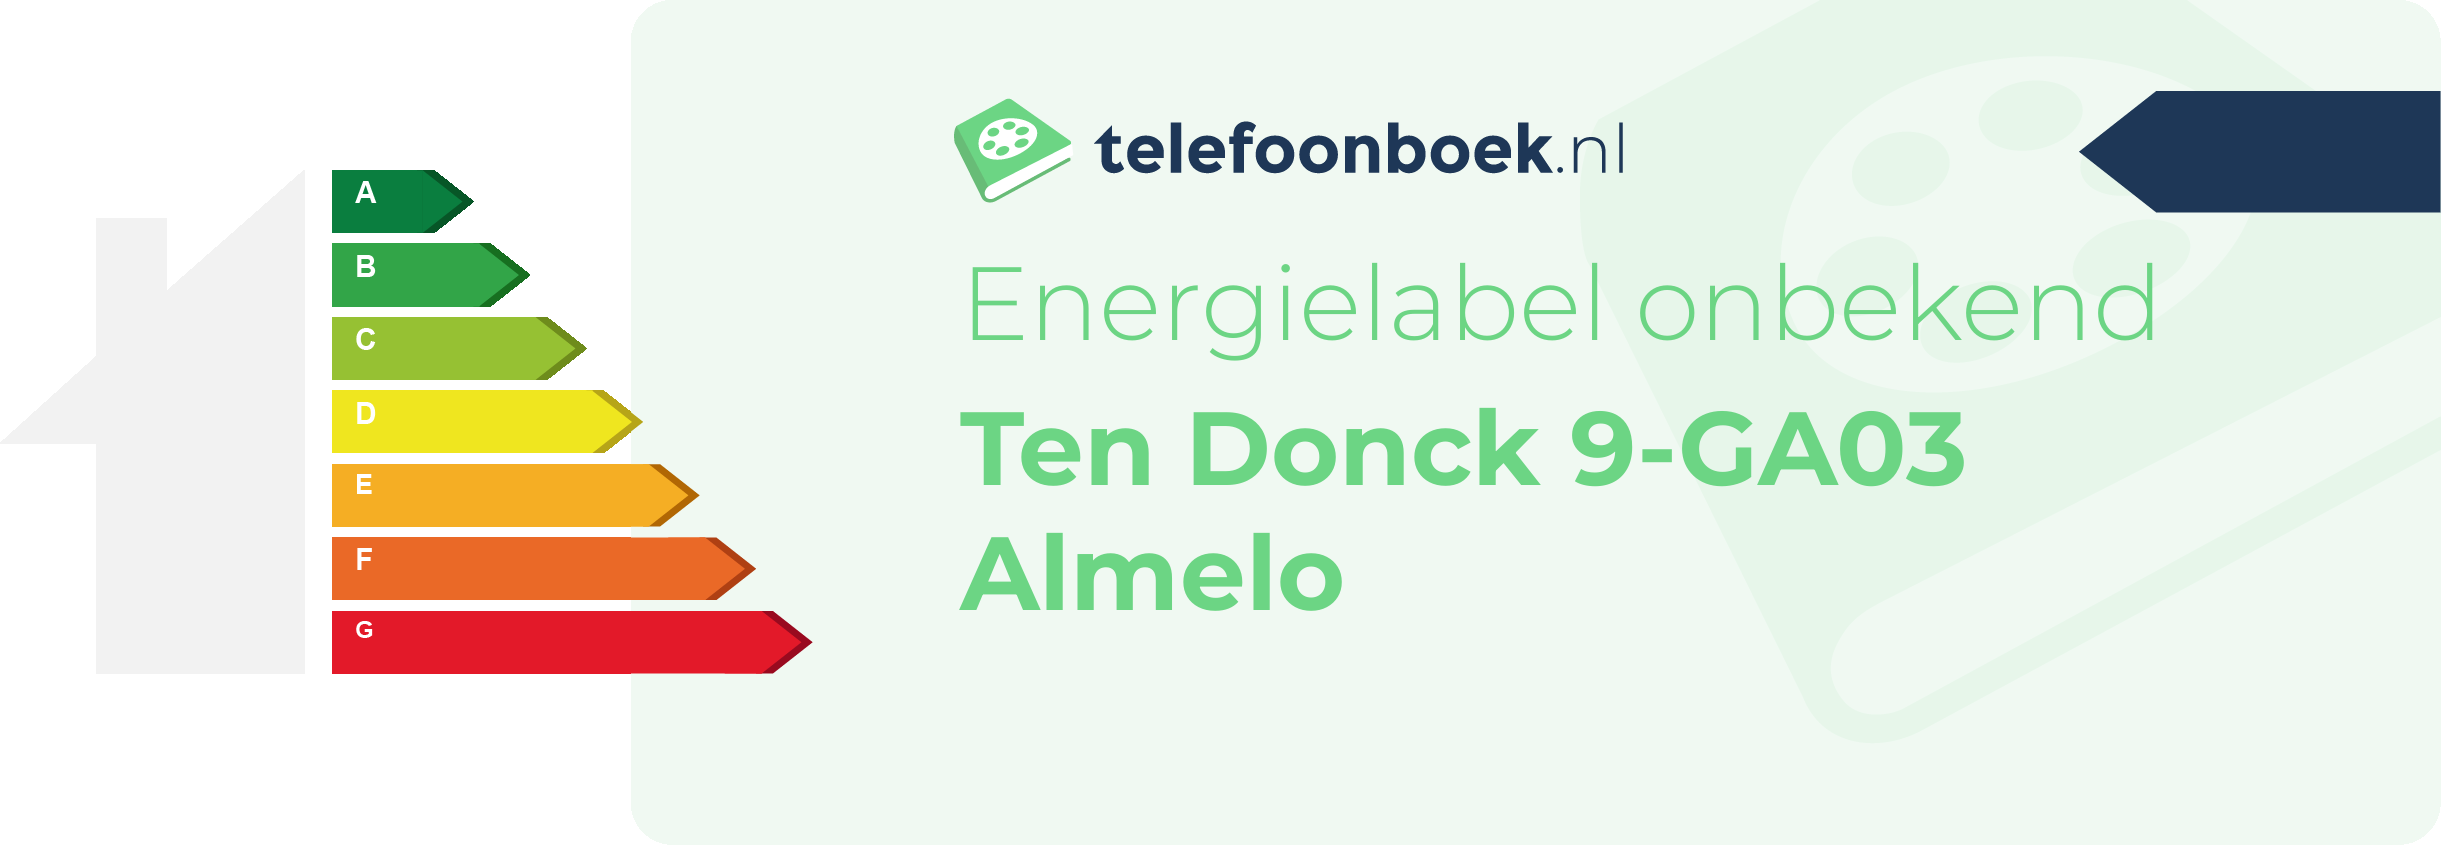 Energielabel Ten Donck 9-GA03 Almelo